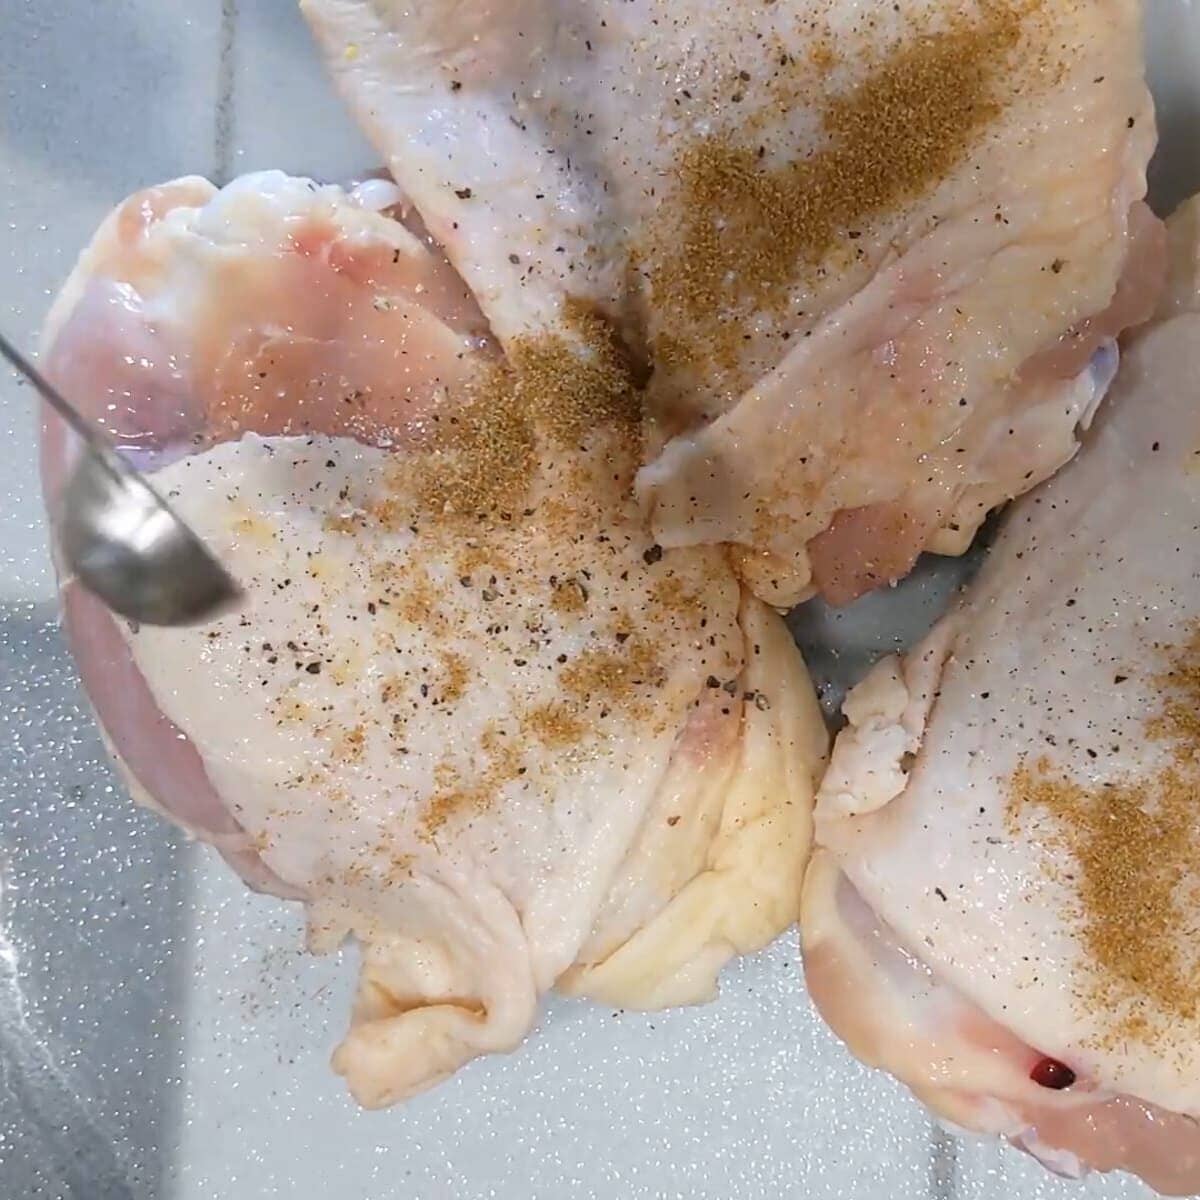 seasoning the chicken